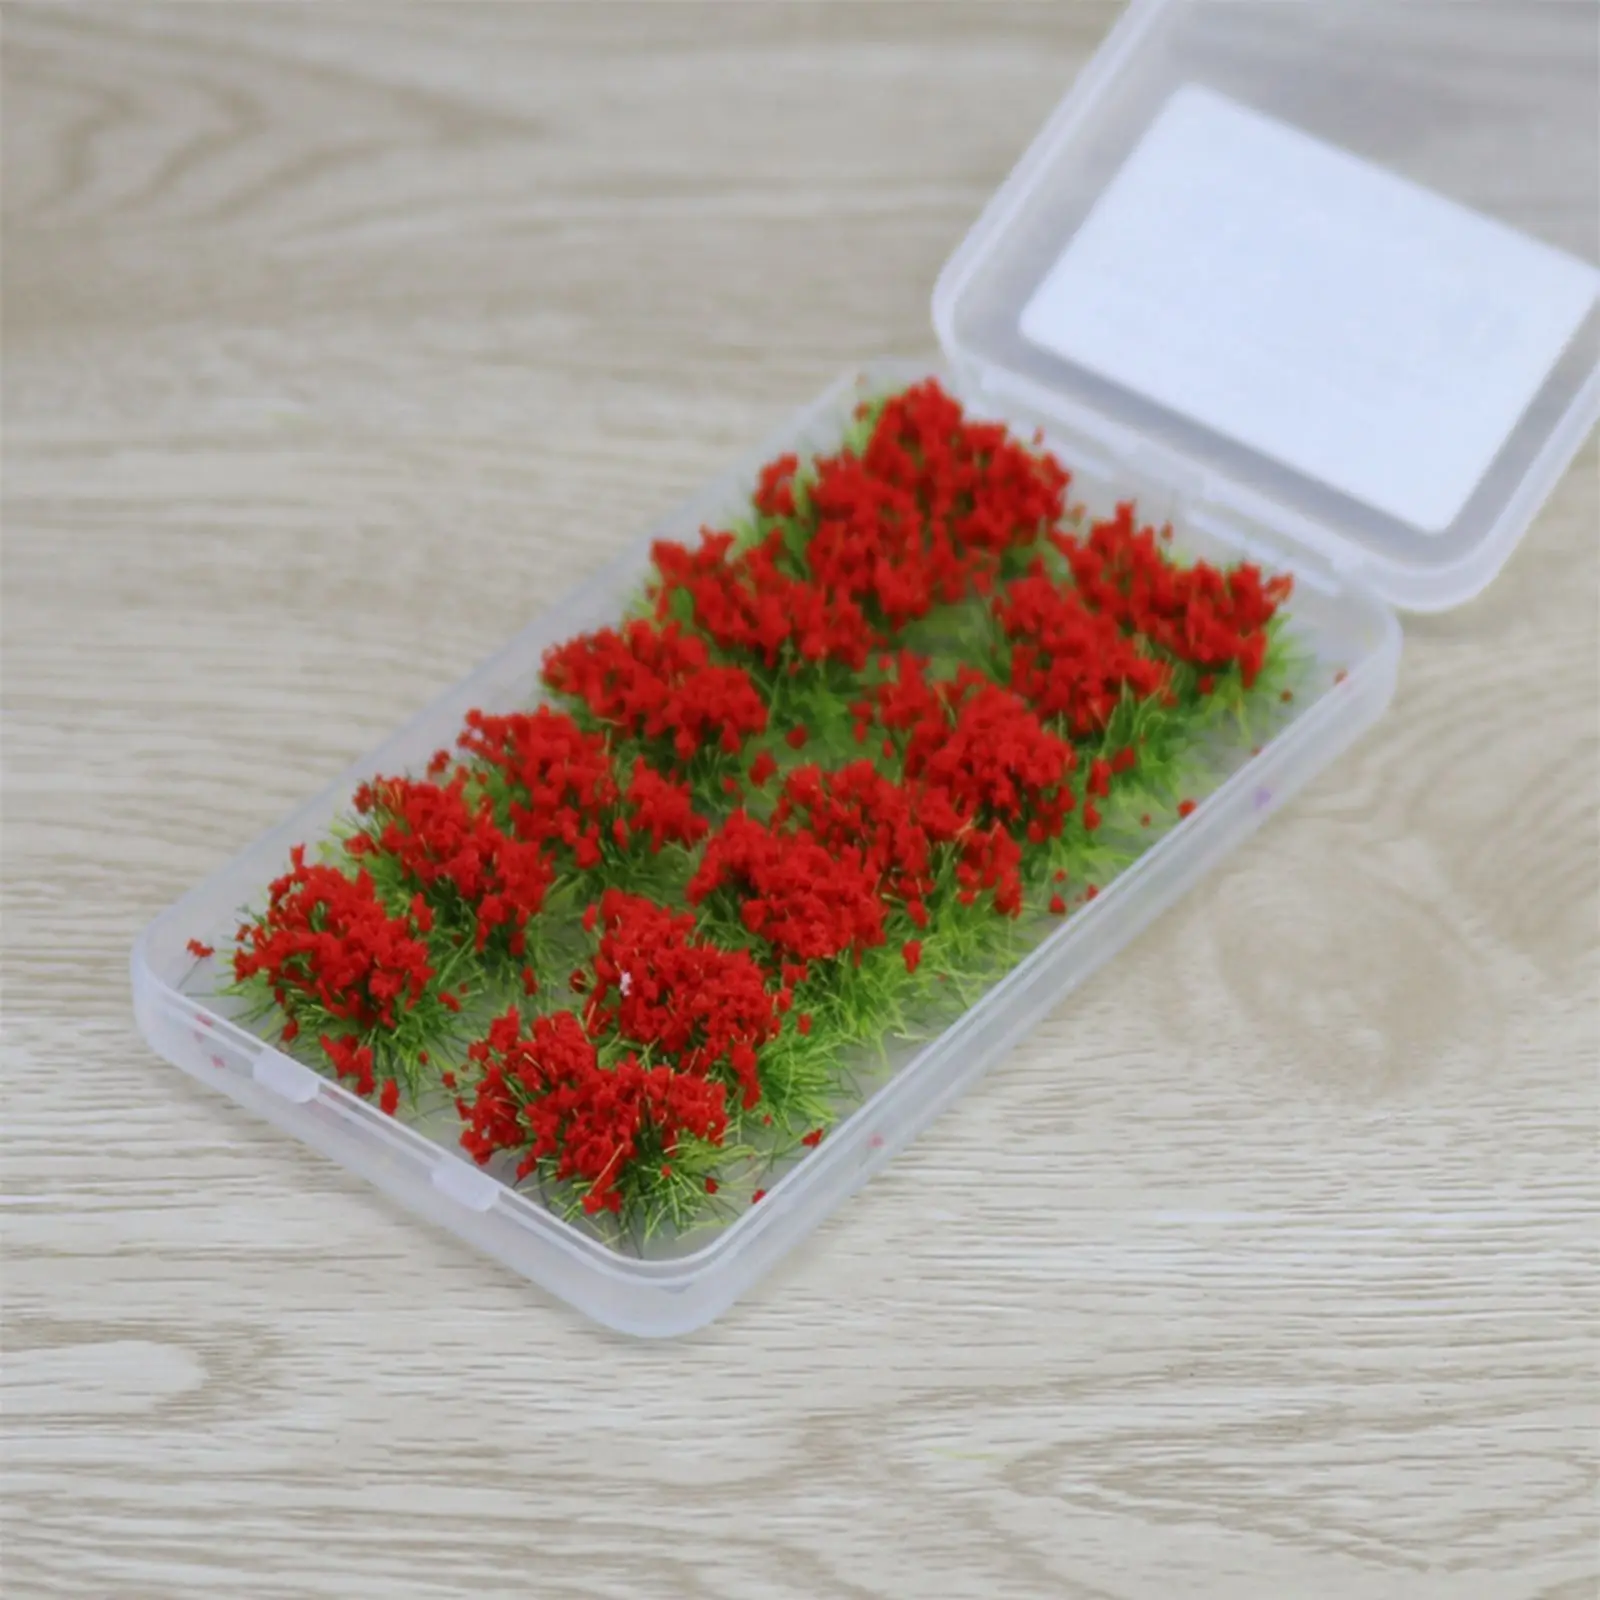 Set of 14 Cluster Grass Flower Cluster Miniature Grass Tuft for Train Railway Model Layout DIY Landscape